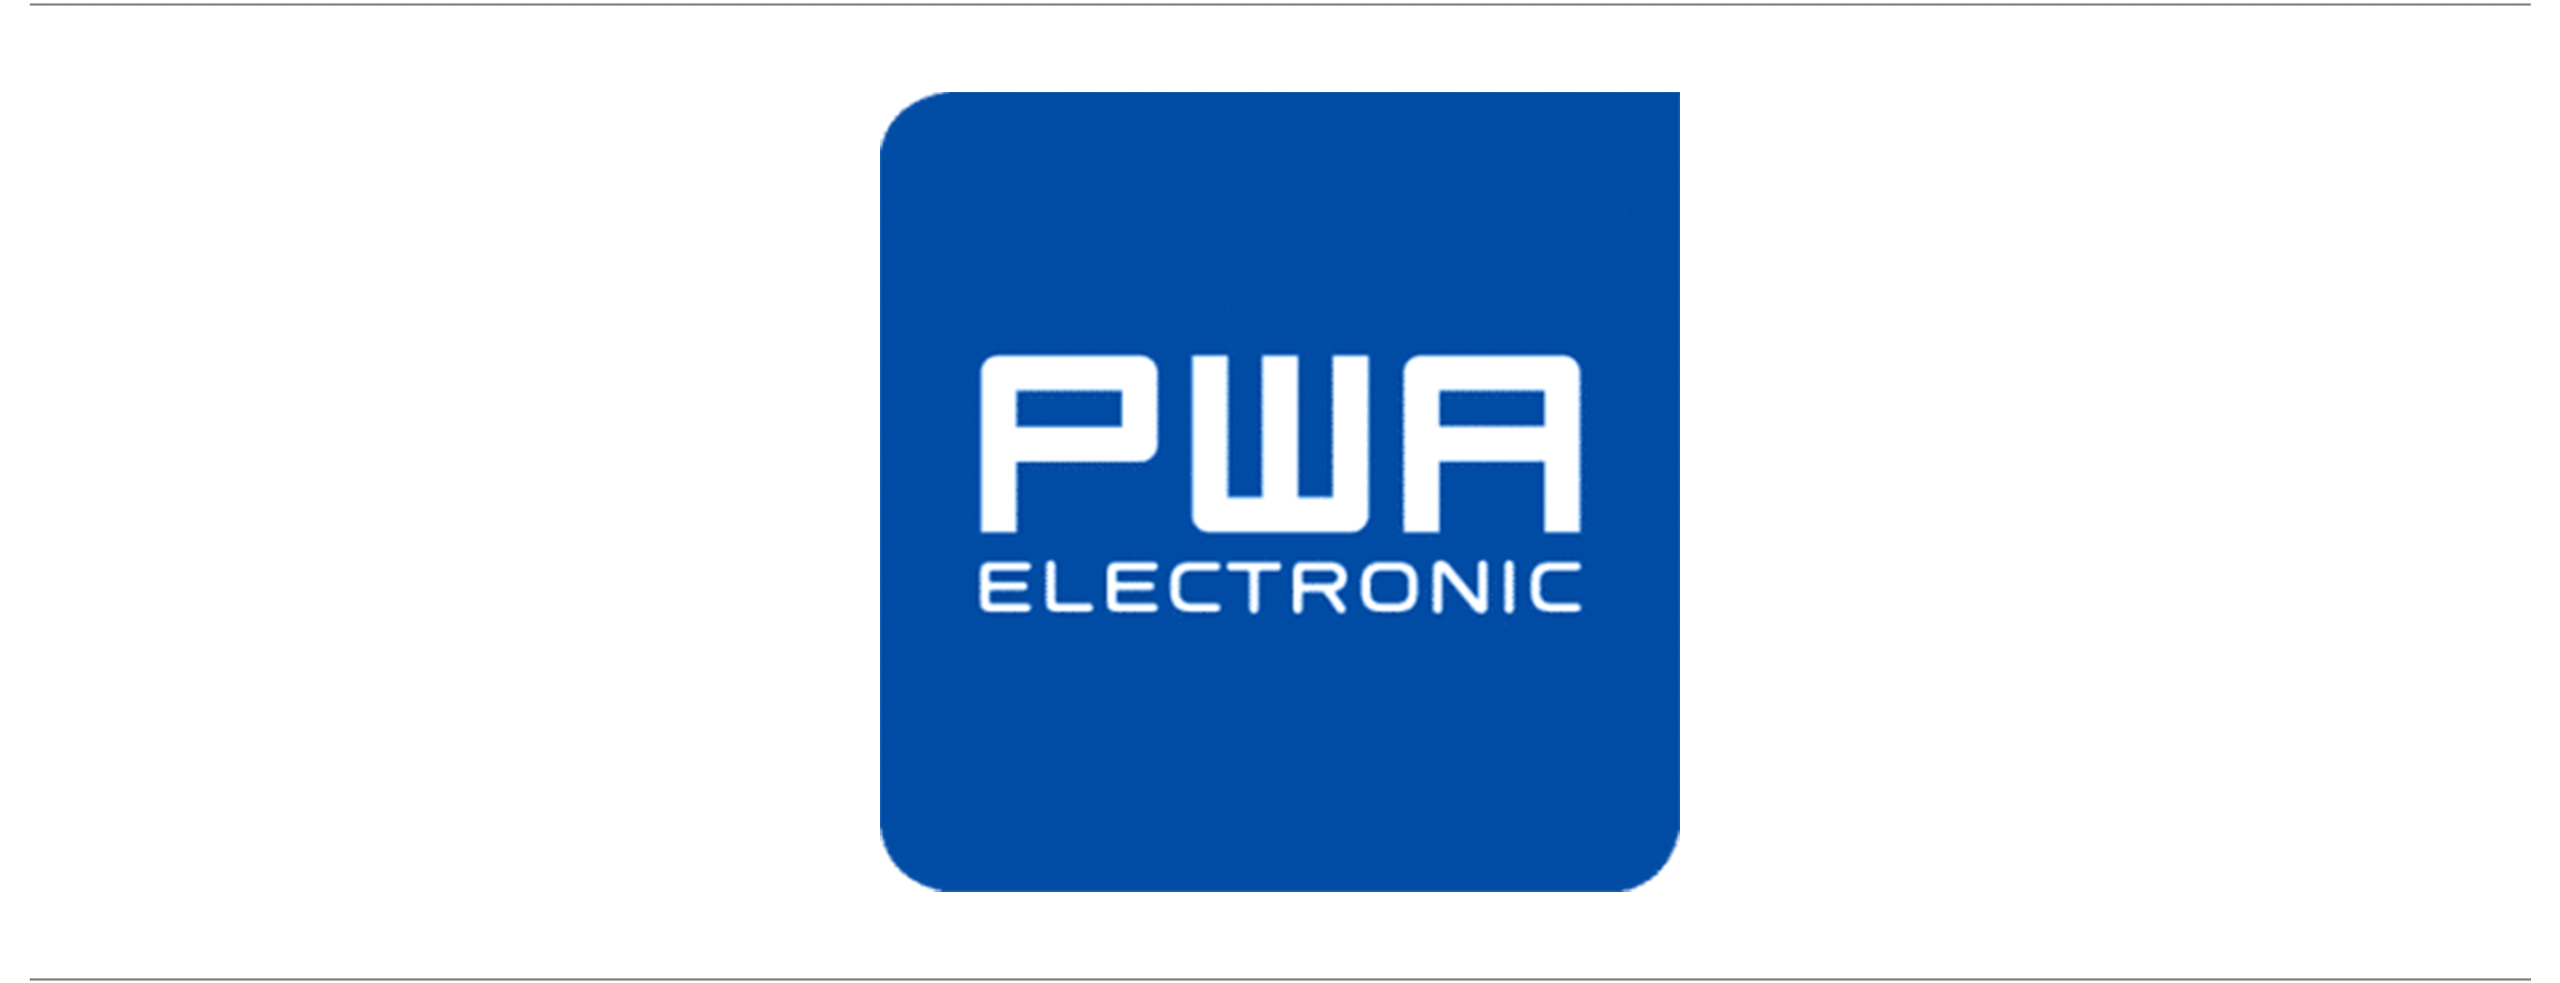 Fireboard Hardwarepartner - PWA ELECTRONIC